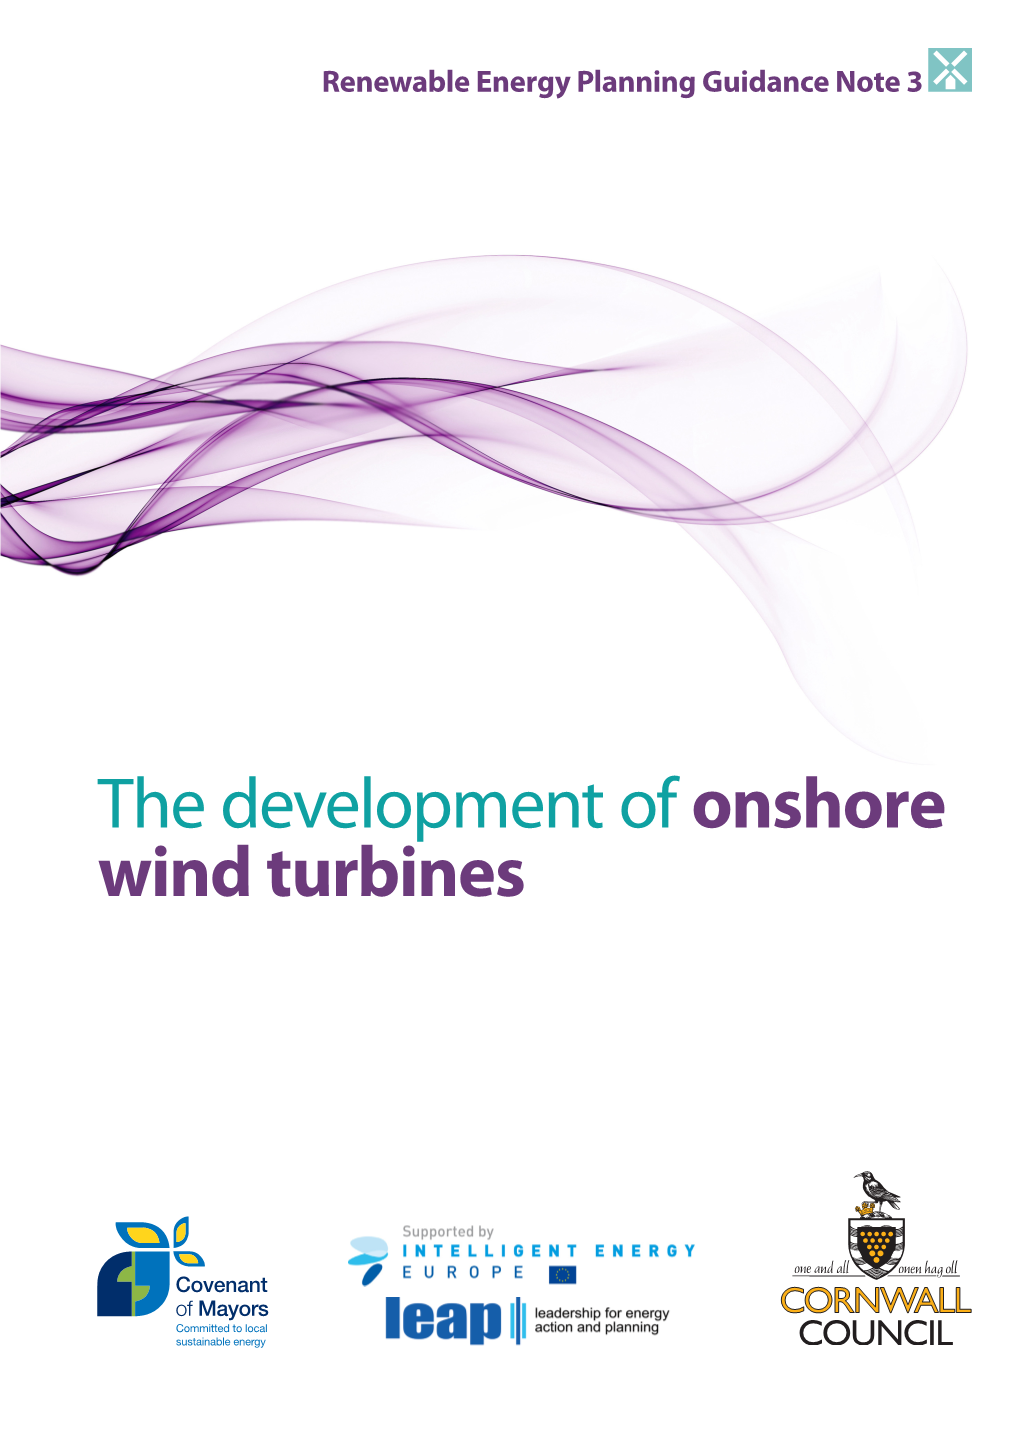 The Development of Onshore Wind Turbines